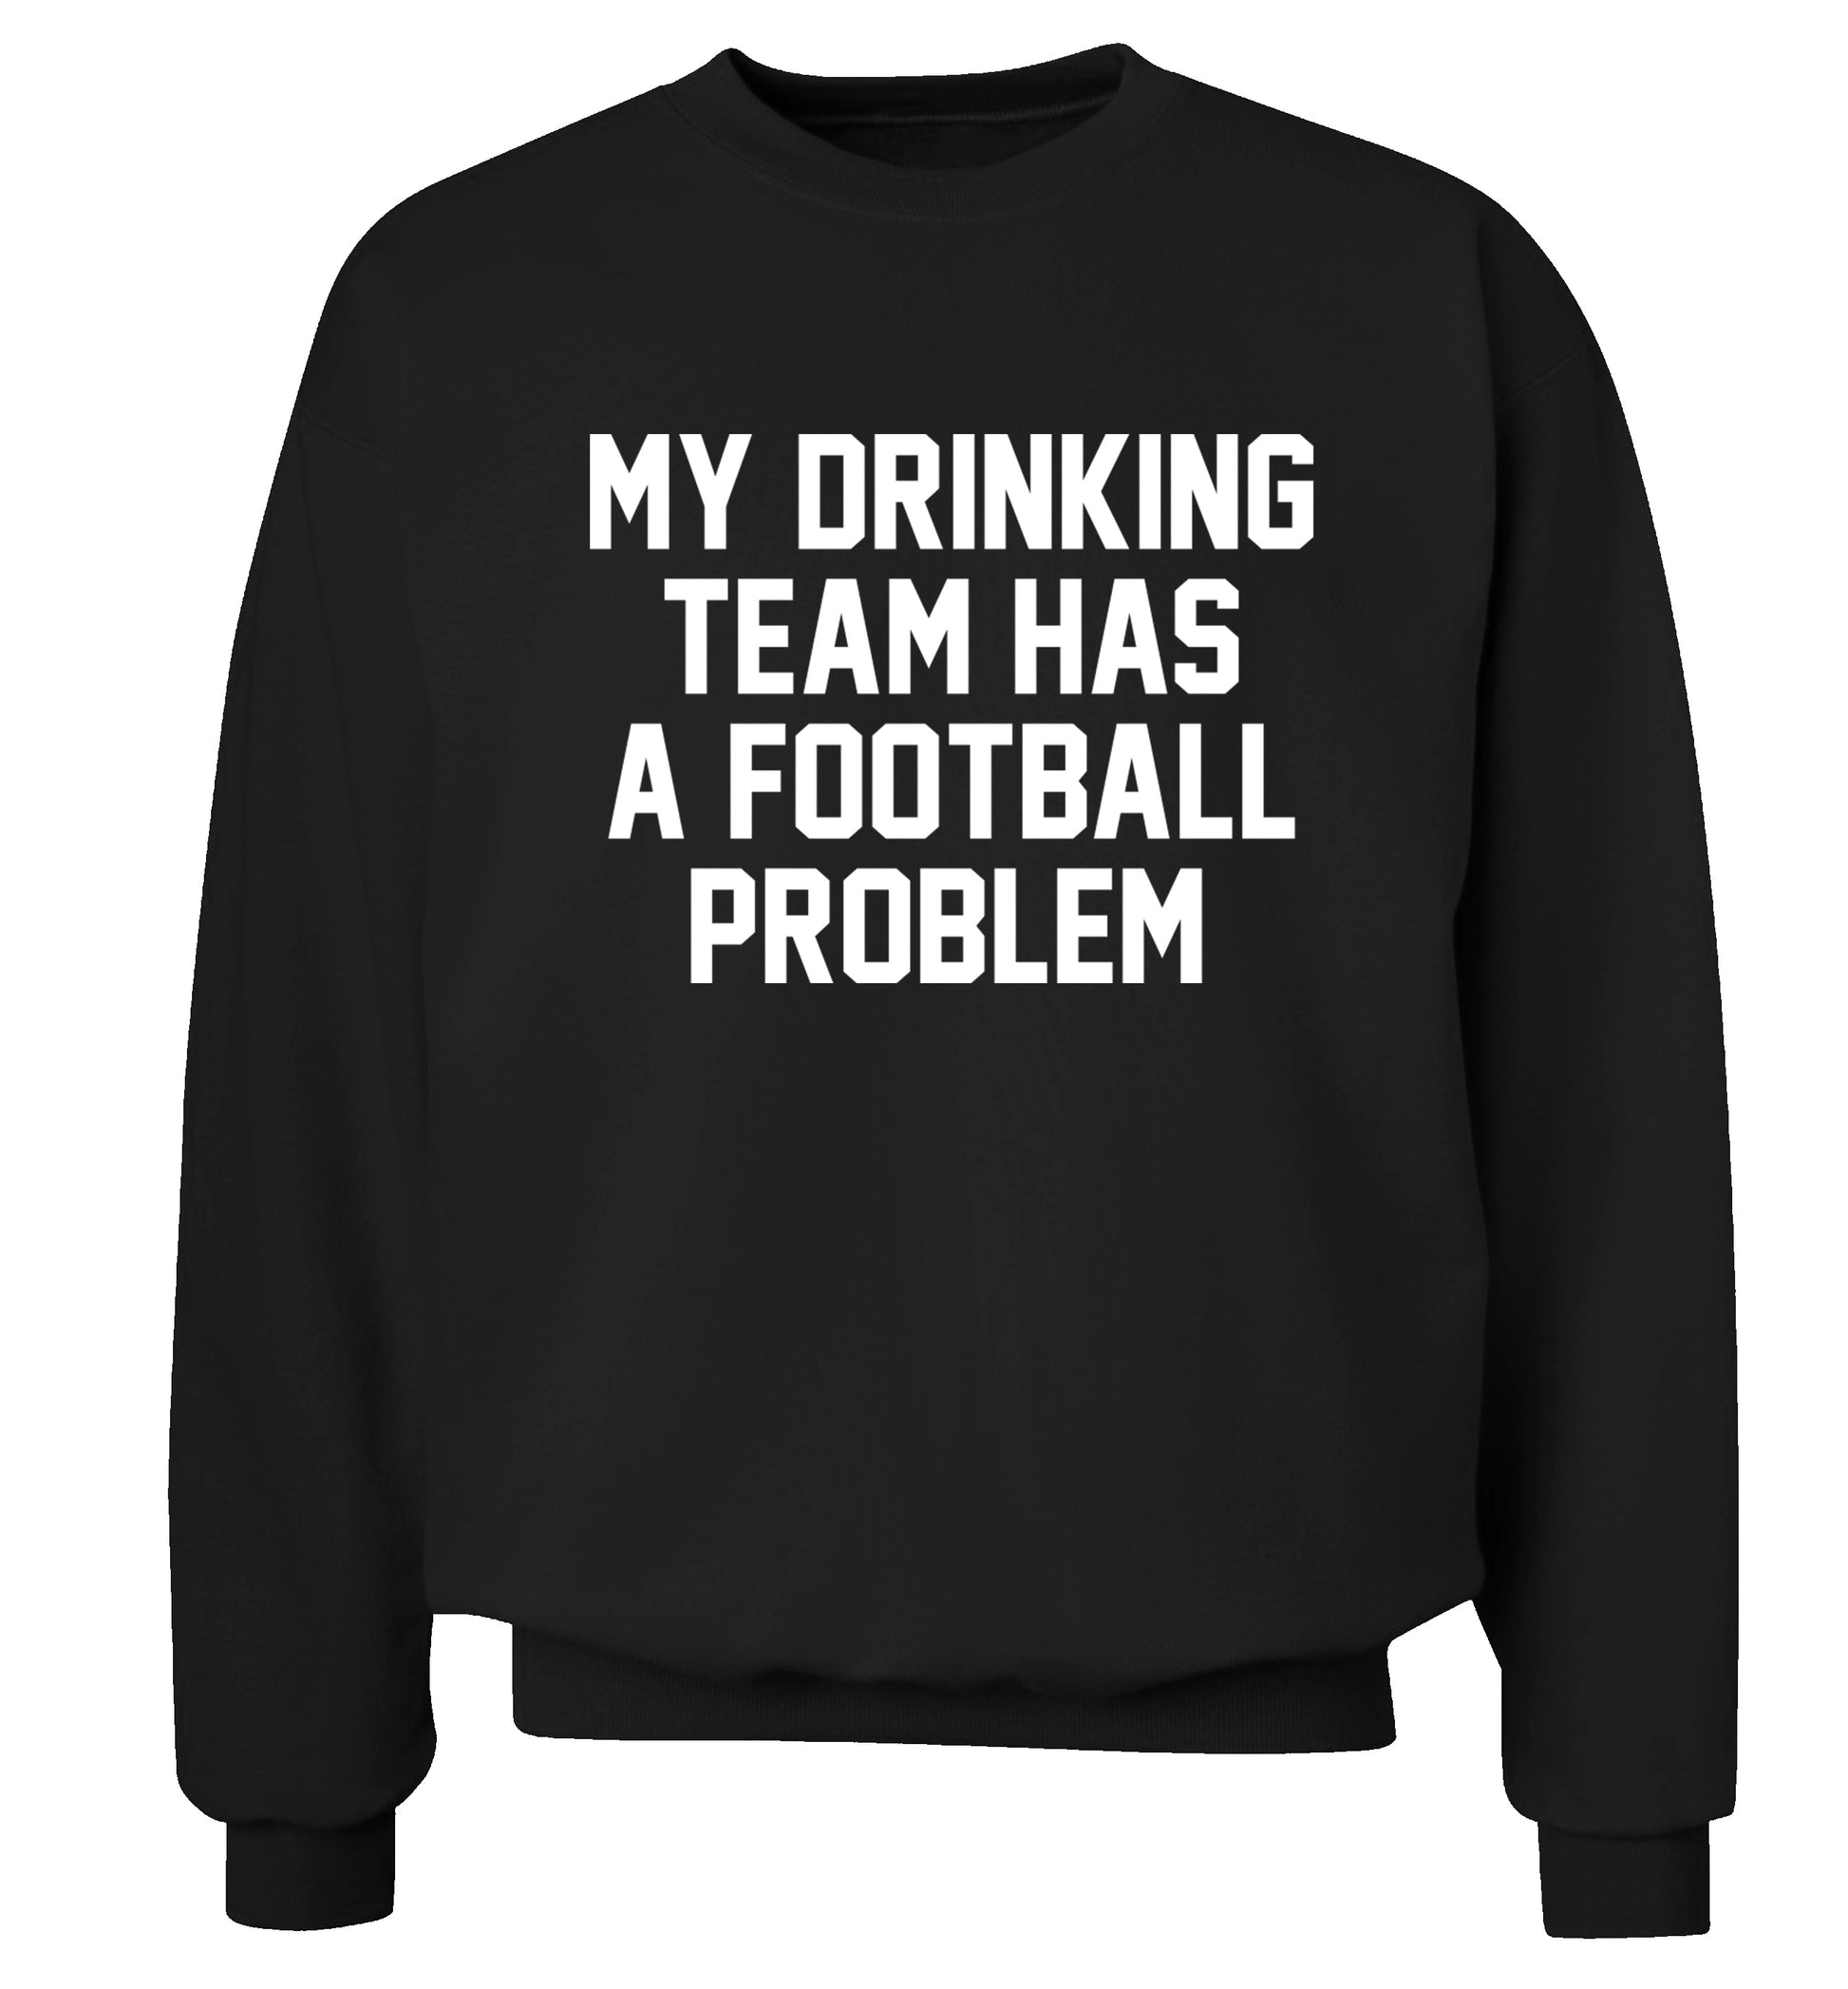 My drinking team has a football problem! Adult's unisexblack Sweater 2XL